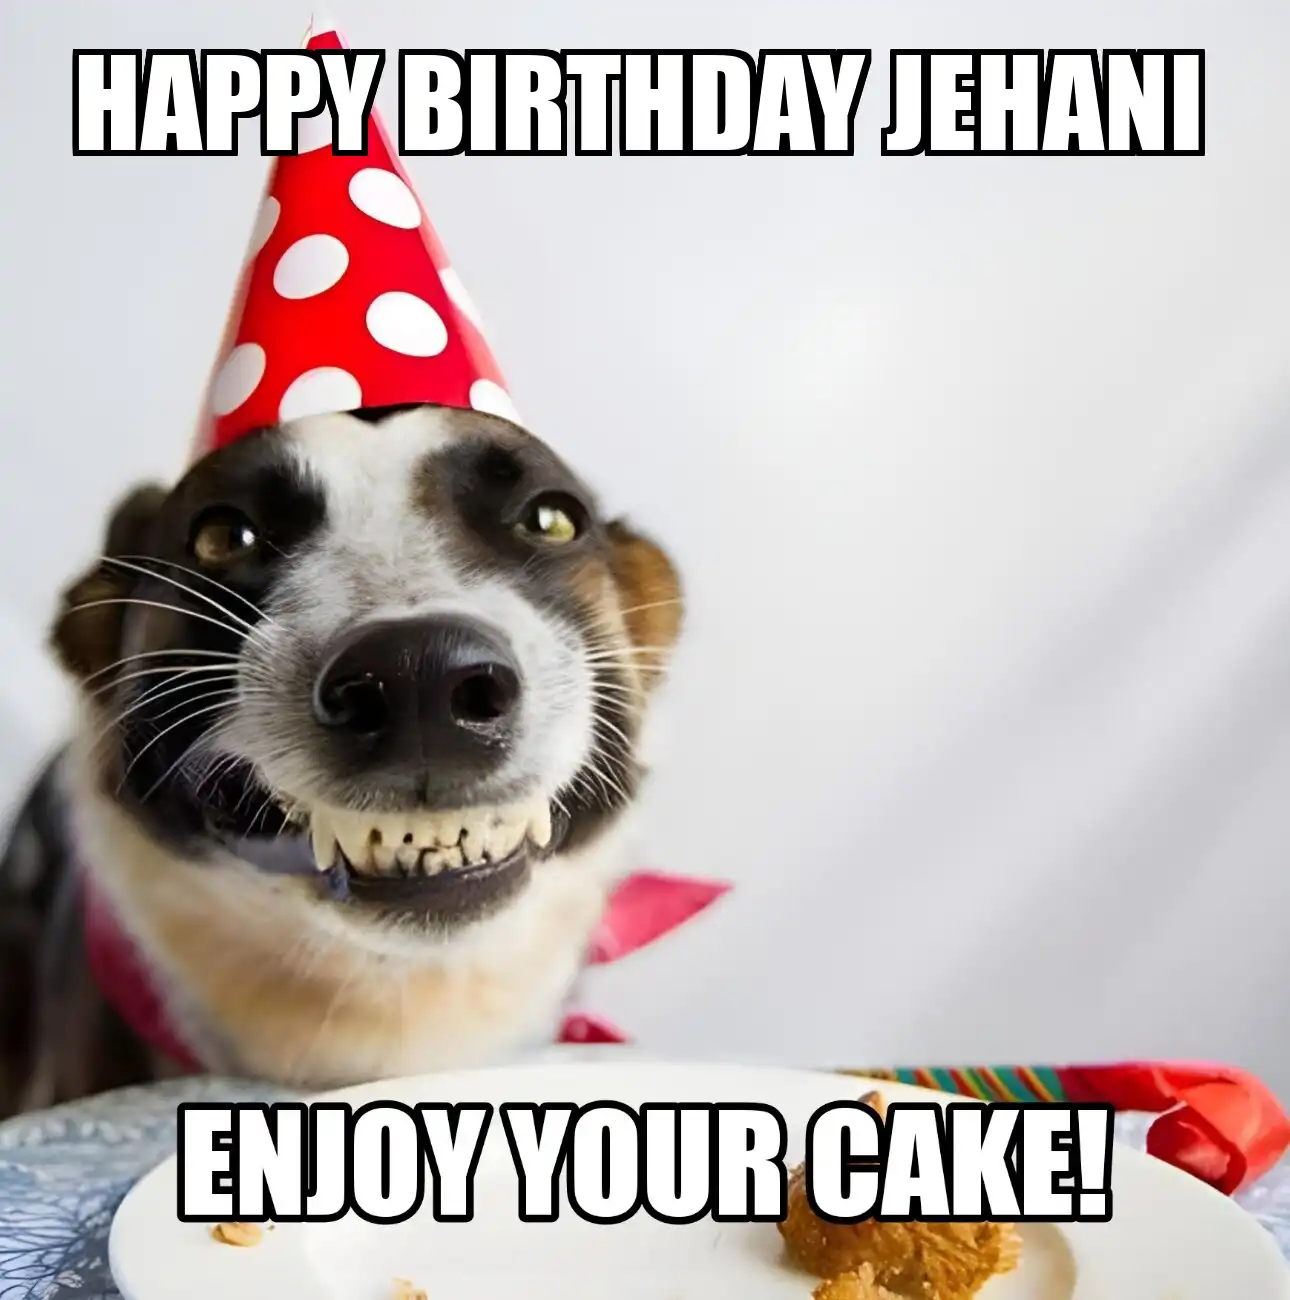 Happy Birthday Jehani Enjoy Your Cake Dog Meme